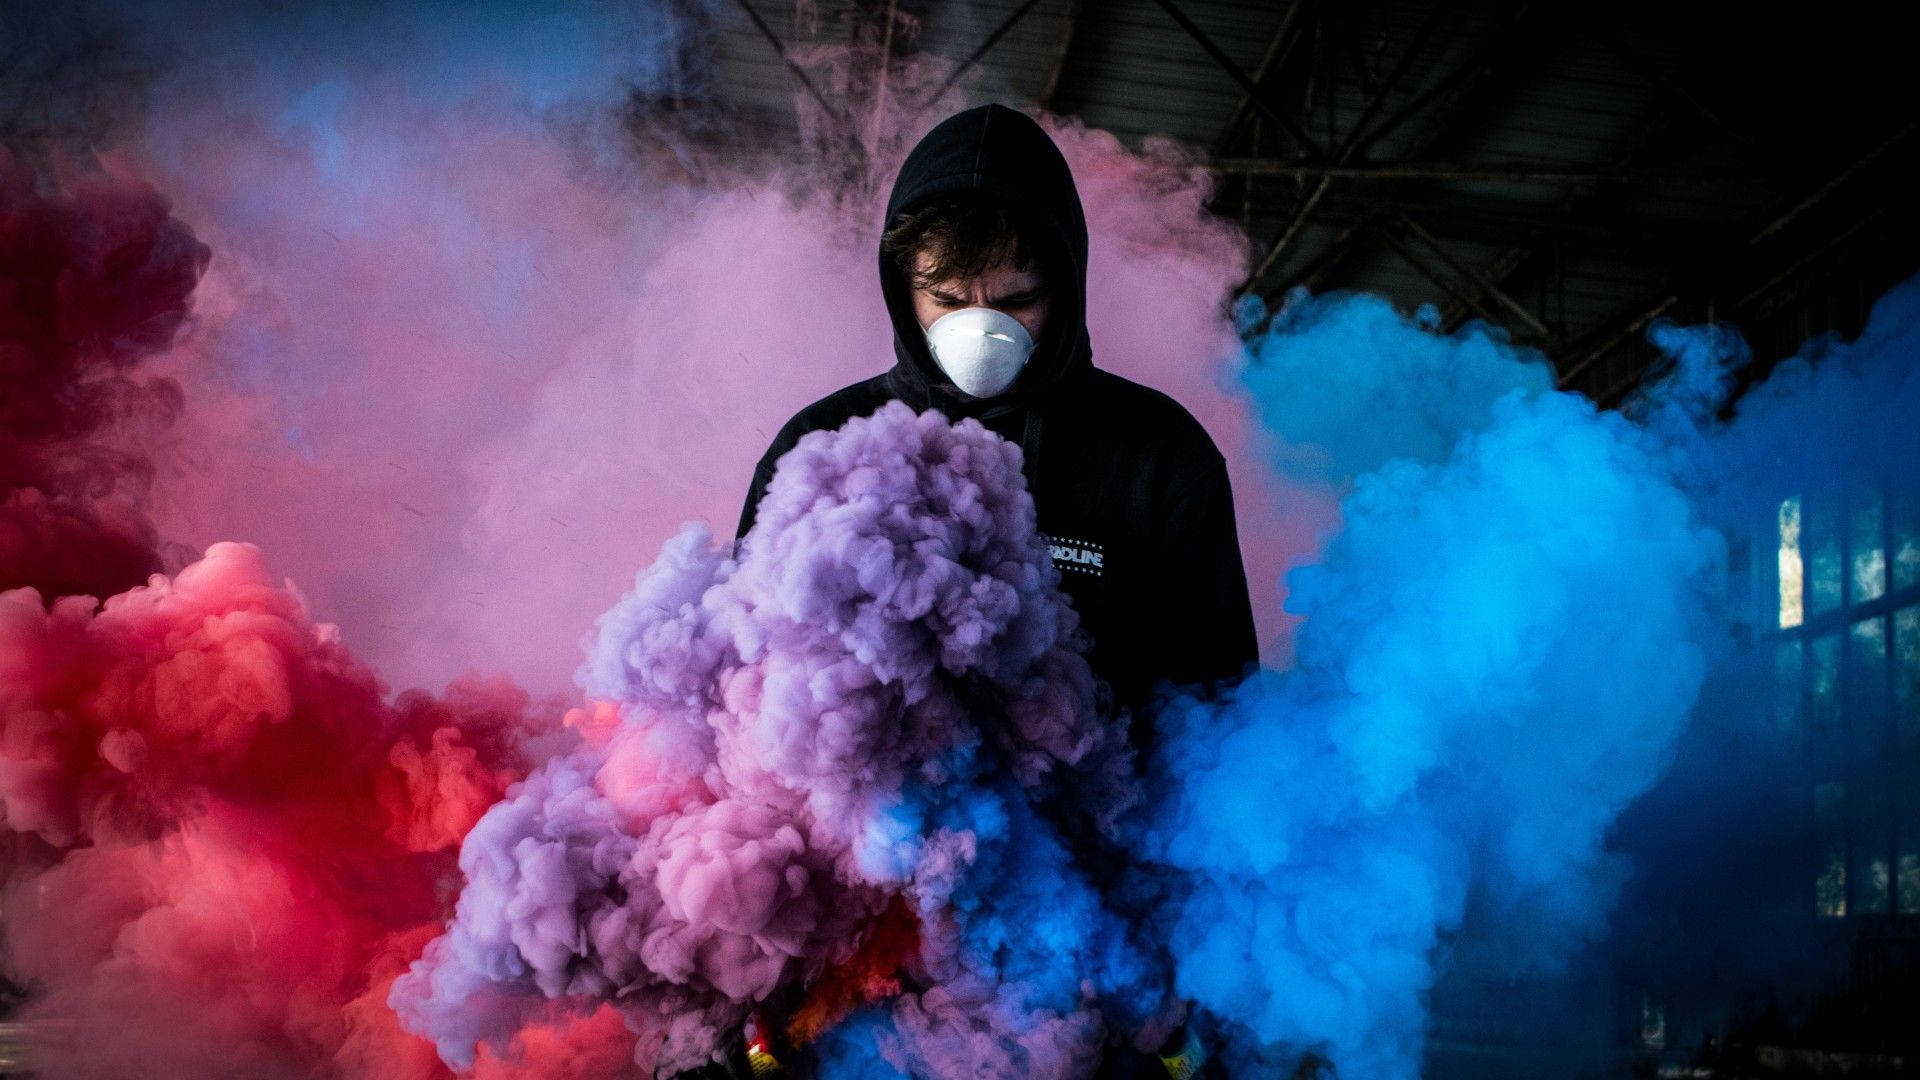 Man Engulfed With Colorful Gas Smoke